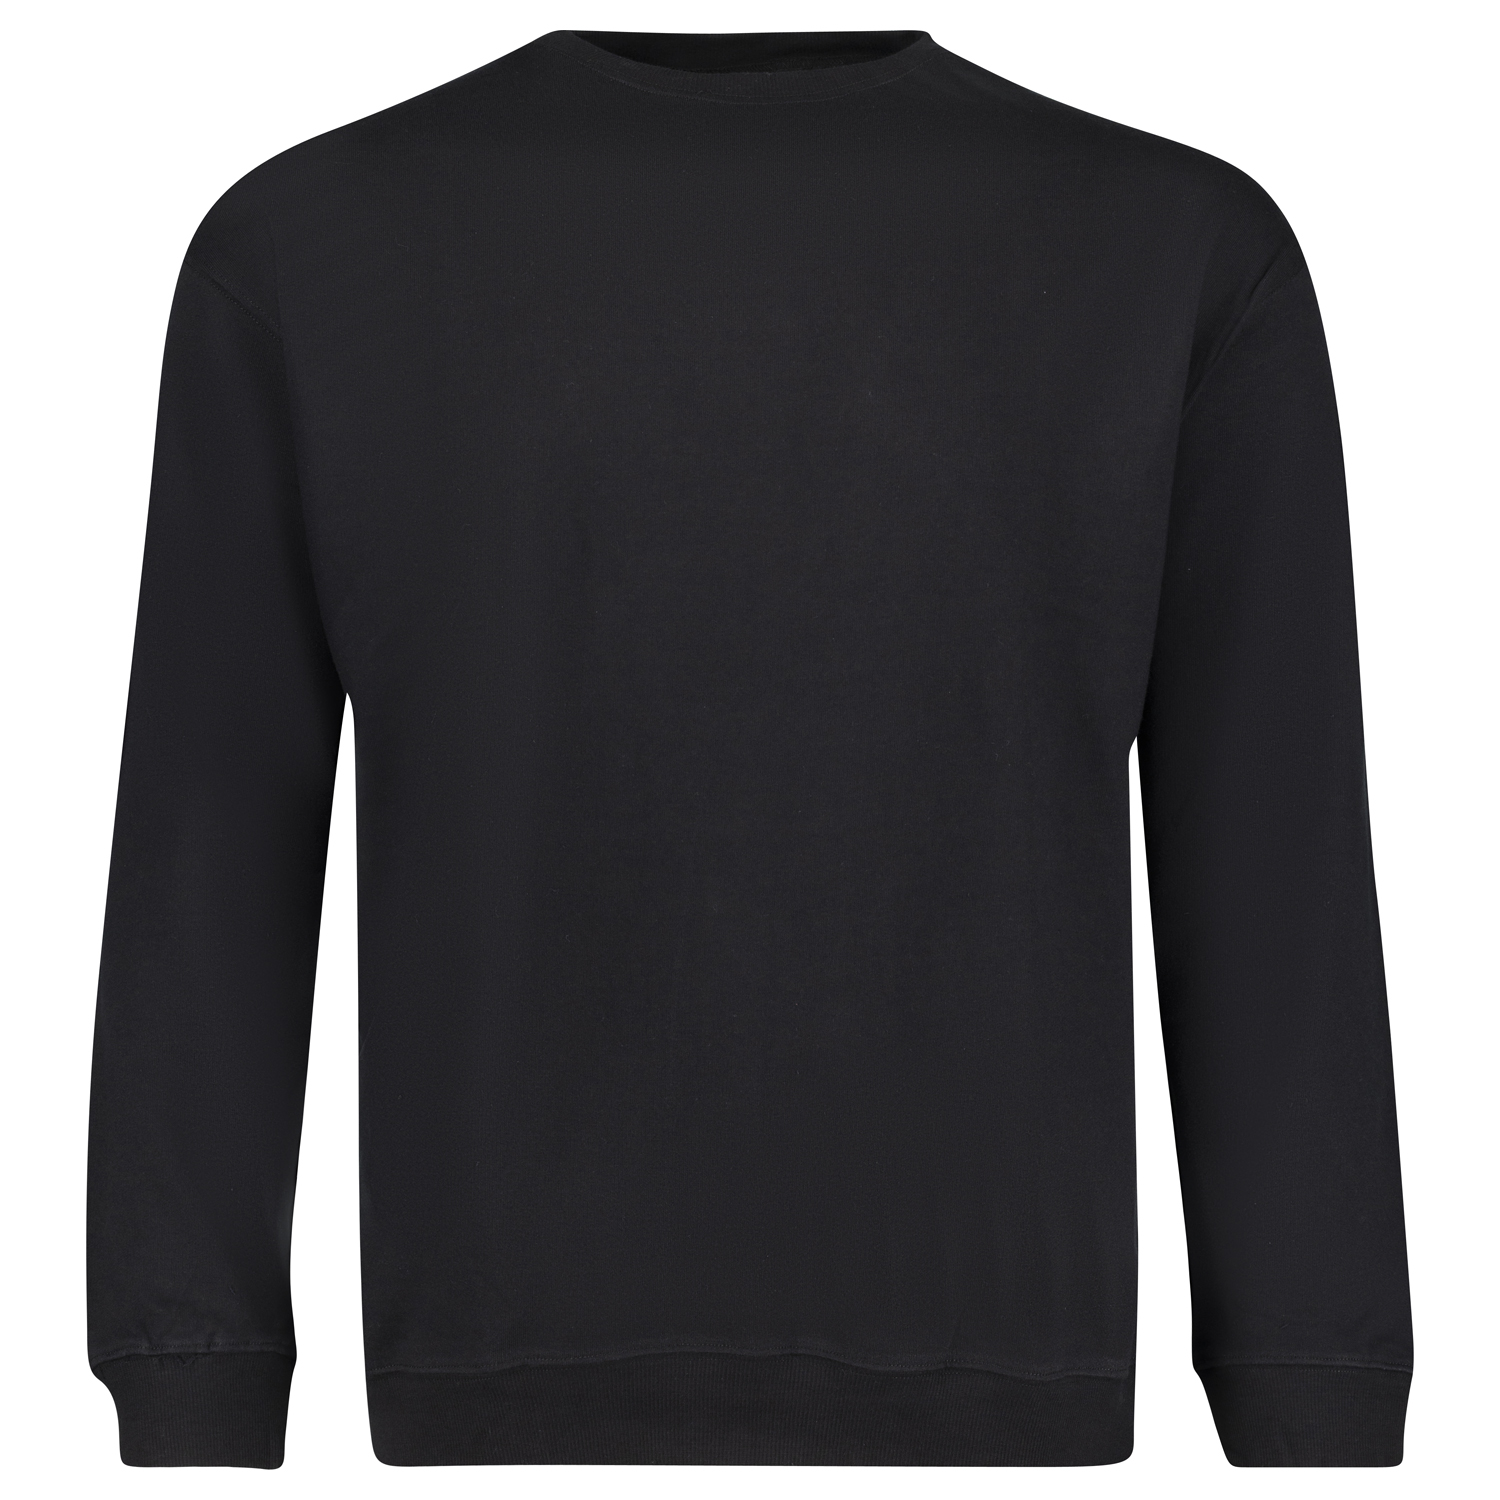 Black Sweatshirt ATHEN by ADAMO for men, up to oversize 14XL